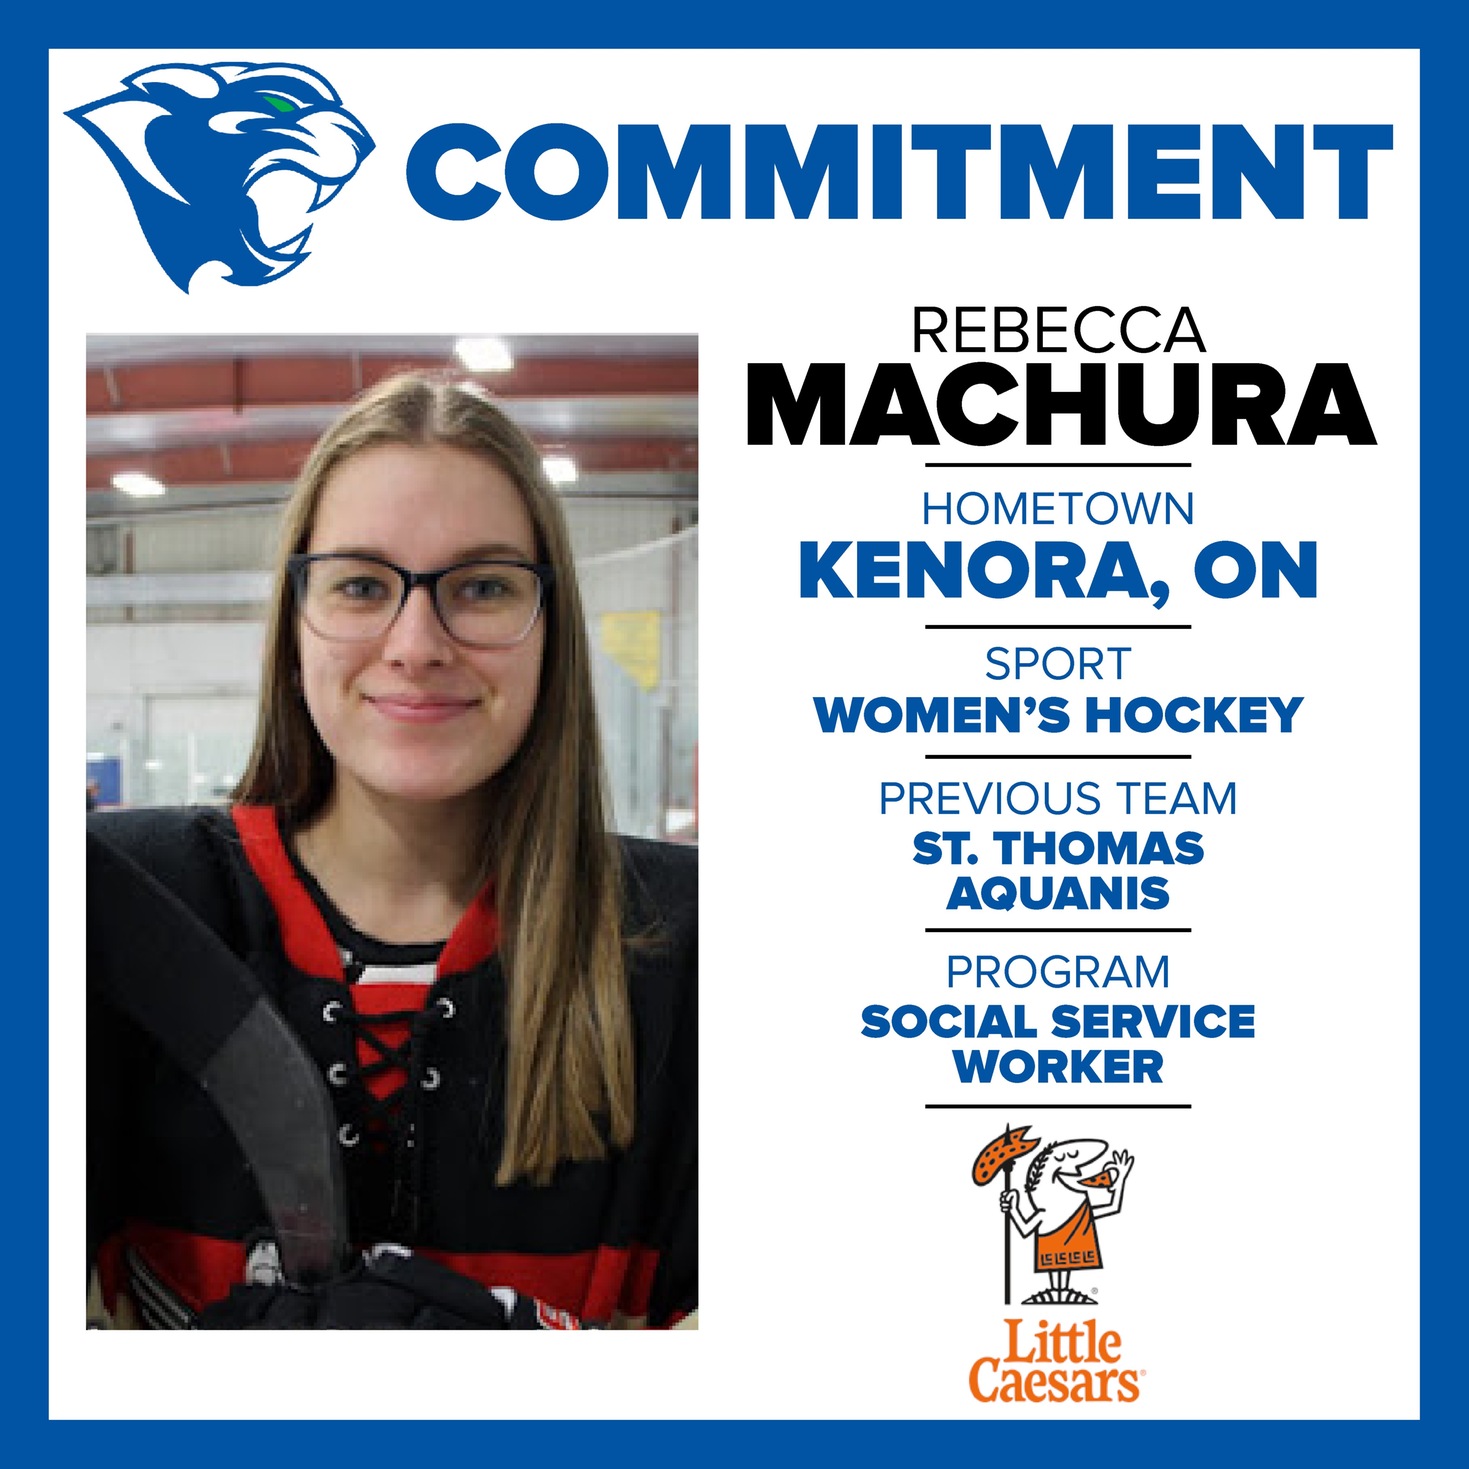 Rebecca Machura joins the Women's Hockey Program